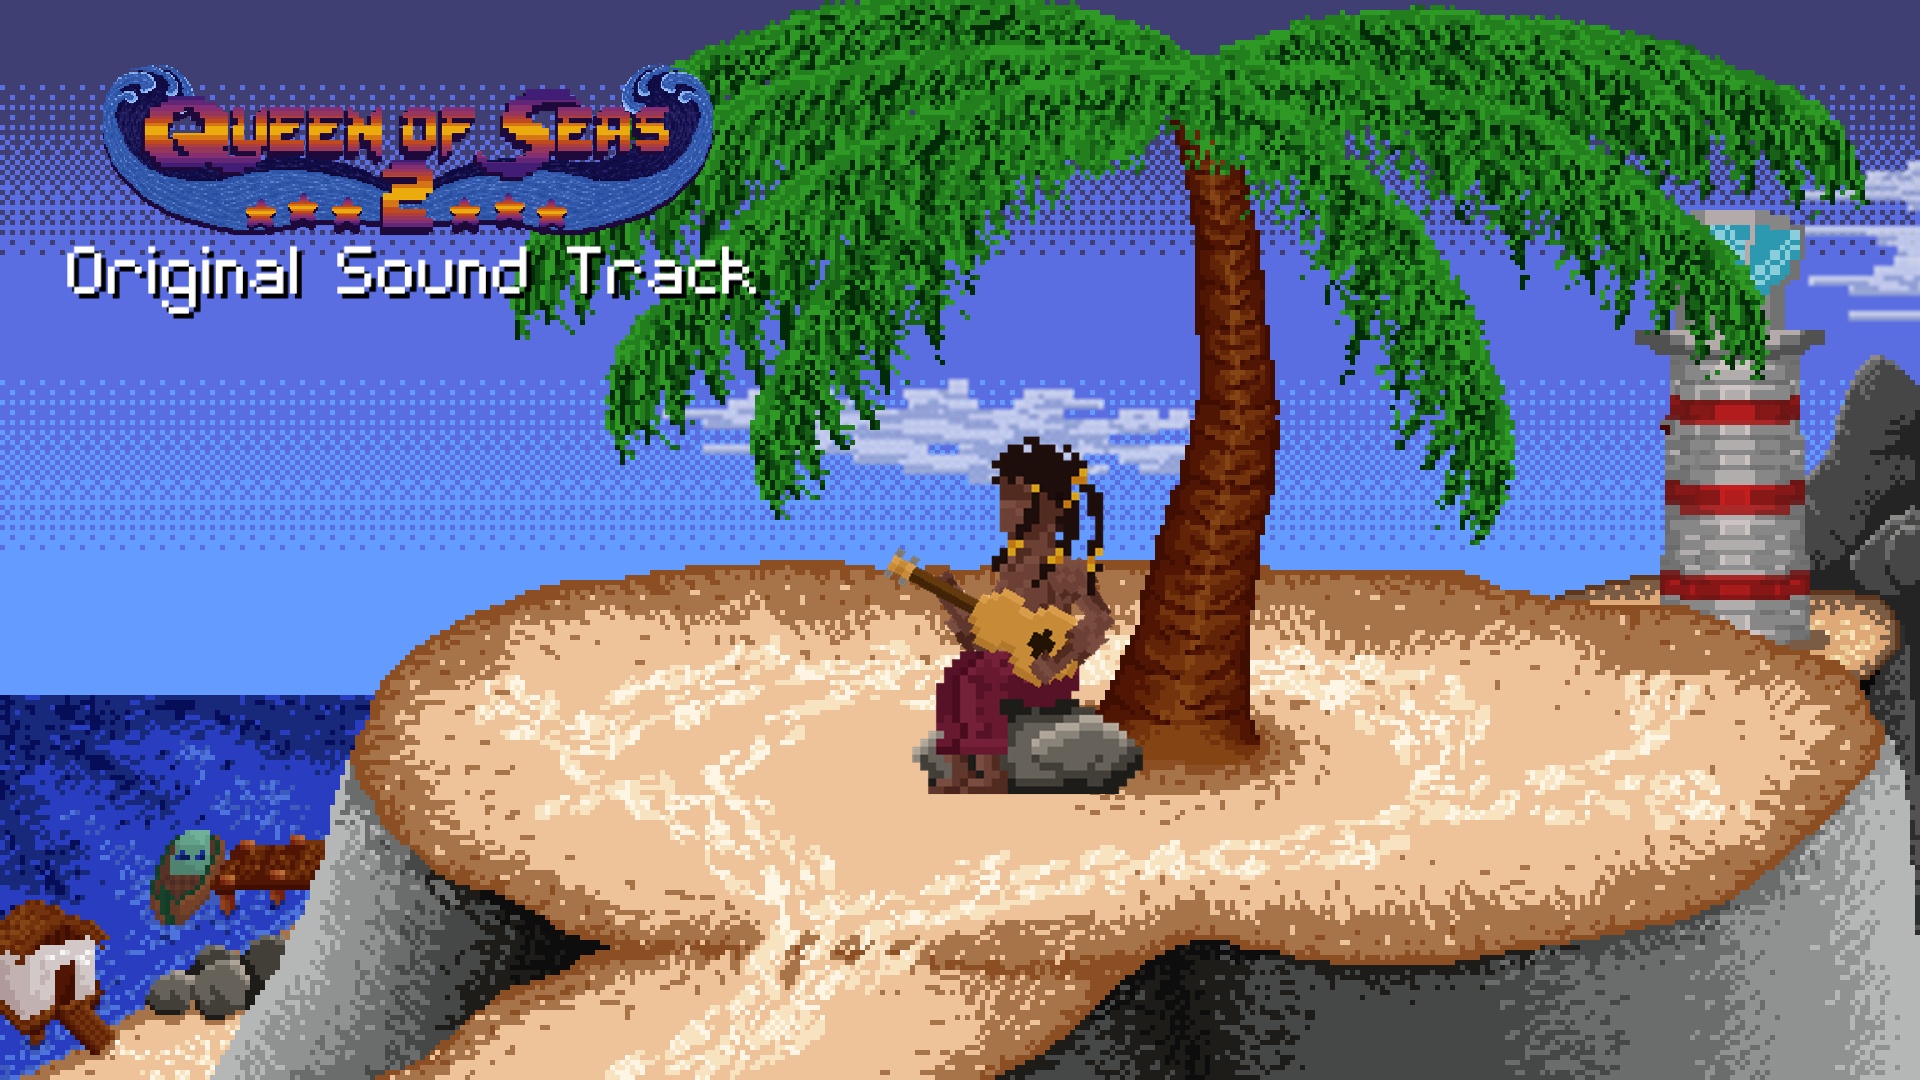 Queen of Seas 2 - Original Sound Track Featured Screenshot #1